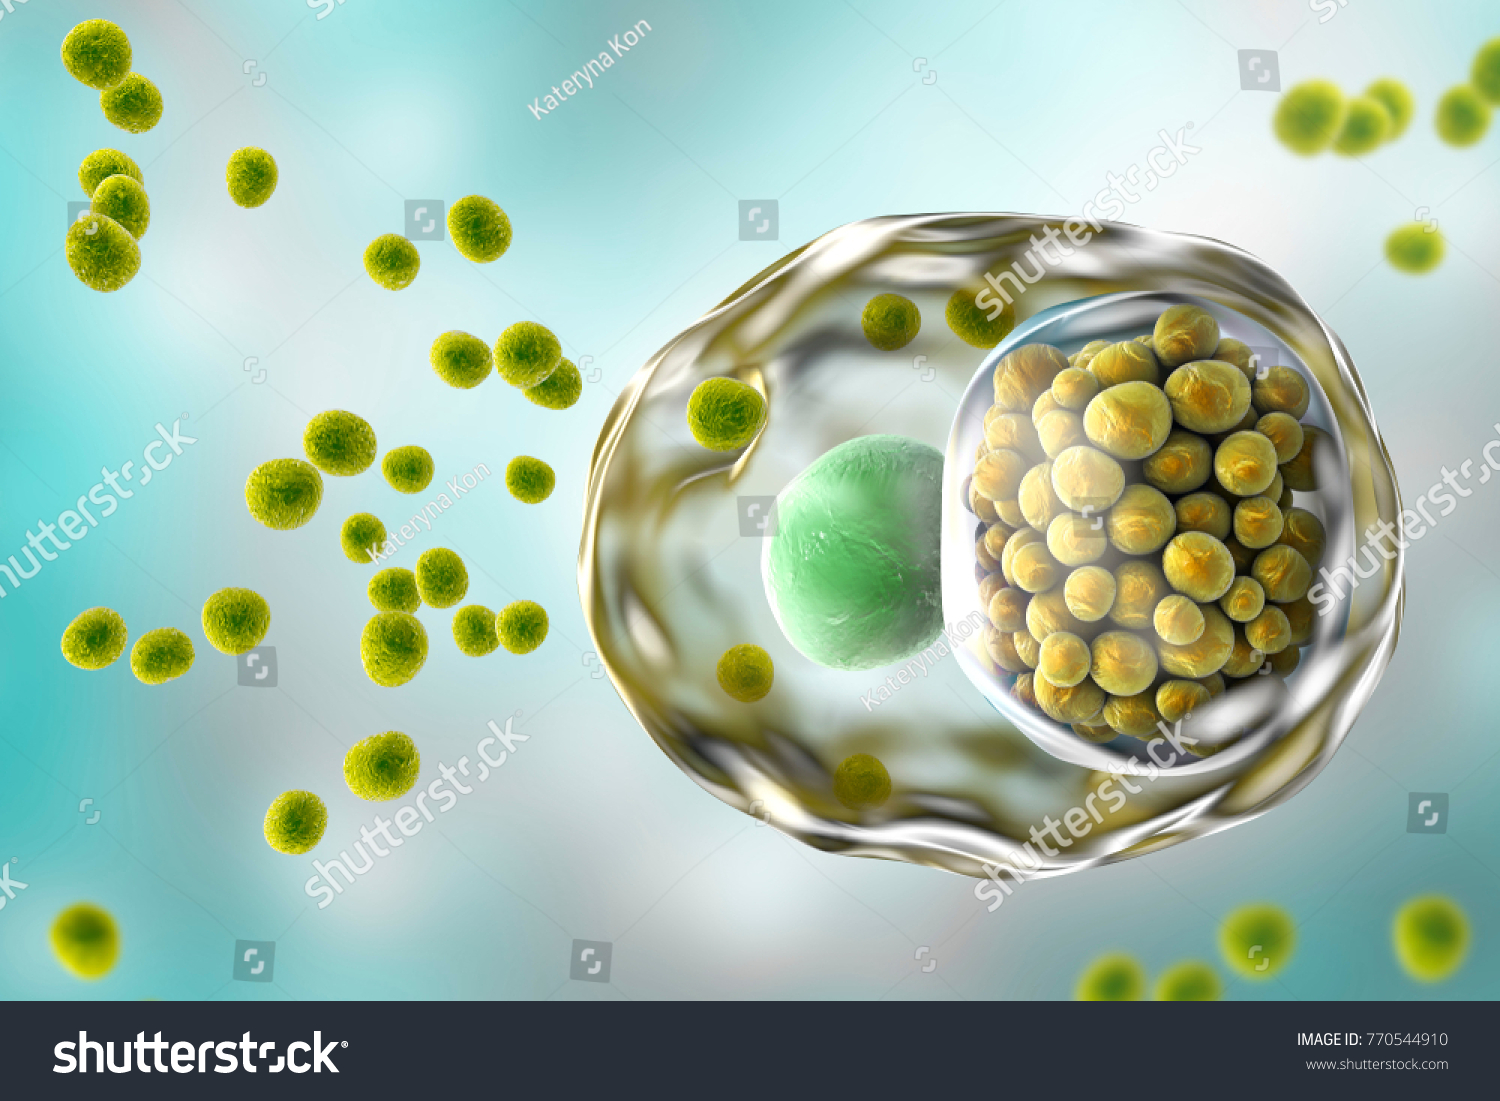 Chlamydia Trachomatis Bacteria 3d Illustration Showing Stock Illustration 770544910 3748